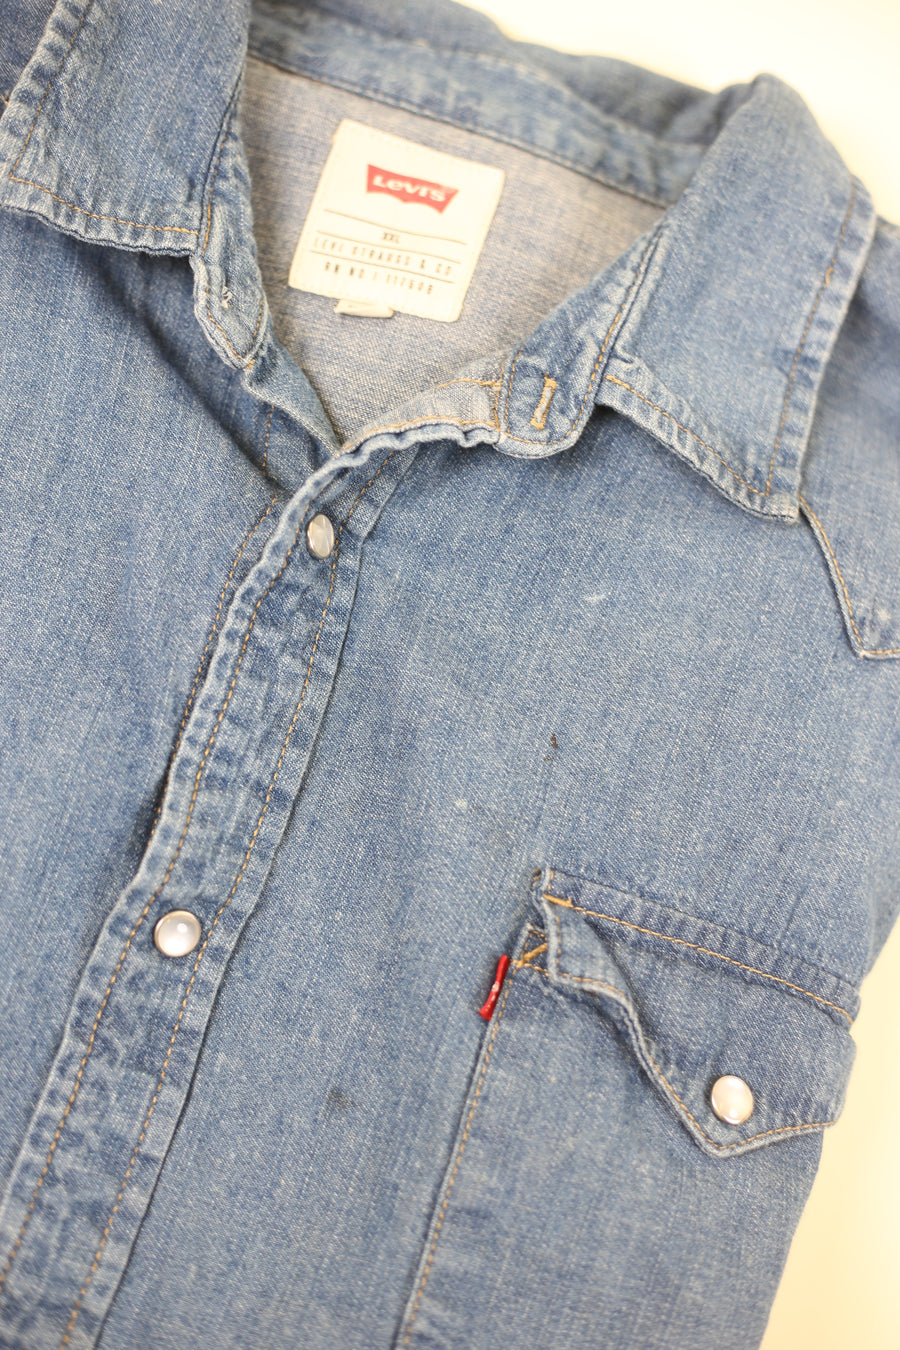 Camicia di jeans  vintage LEVIS - XXL -